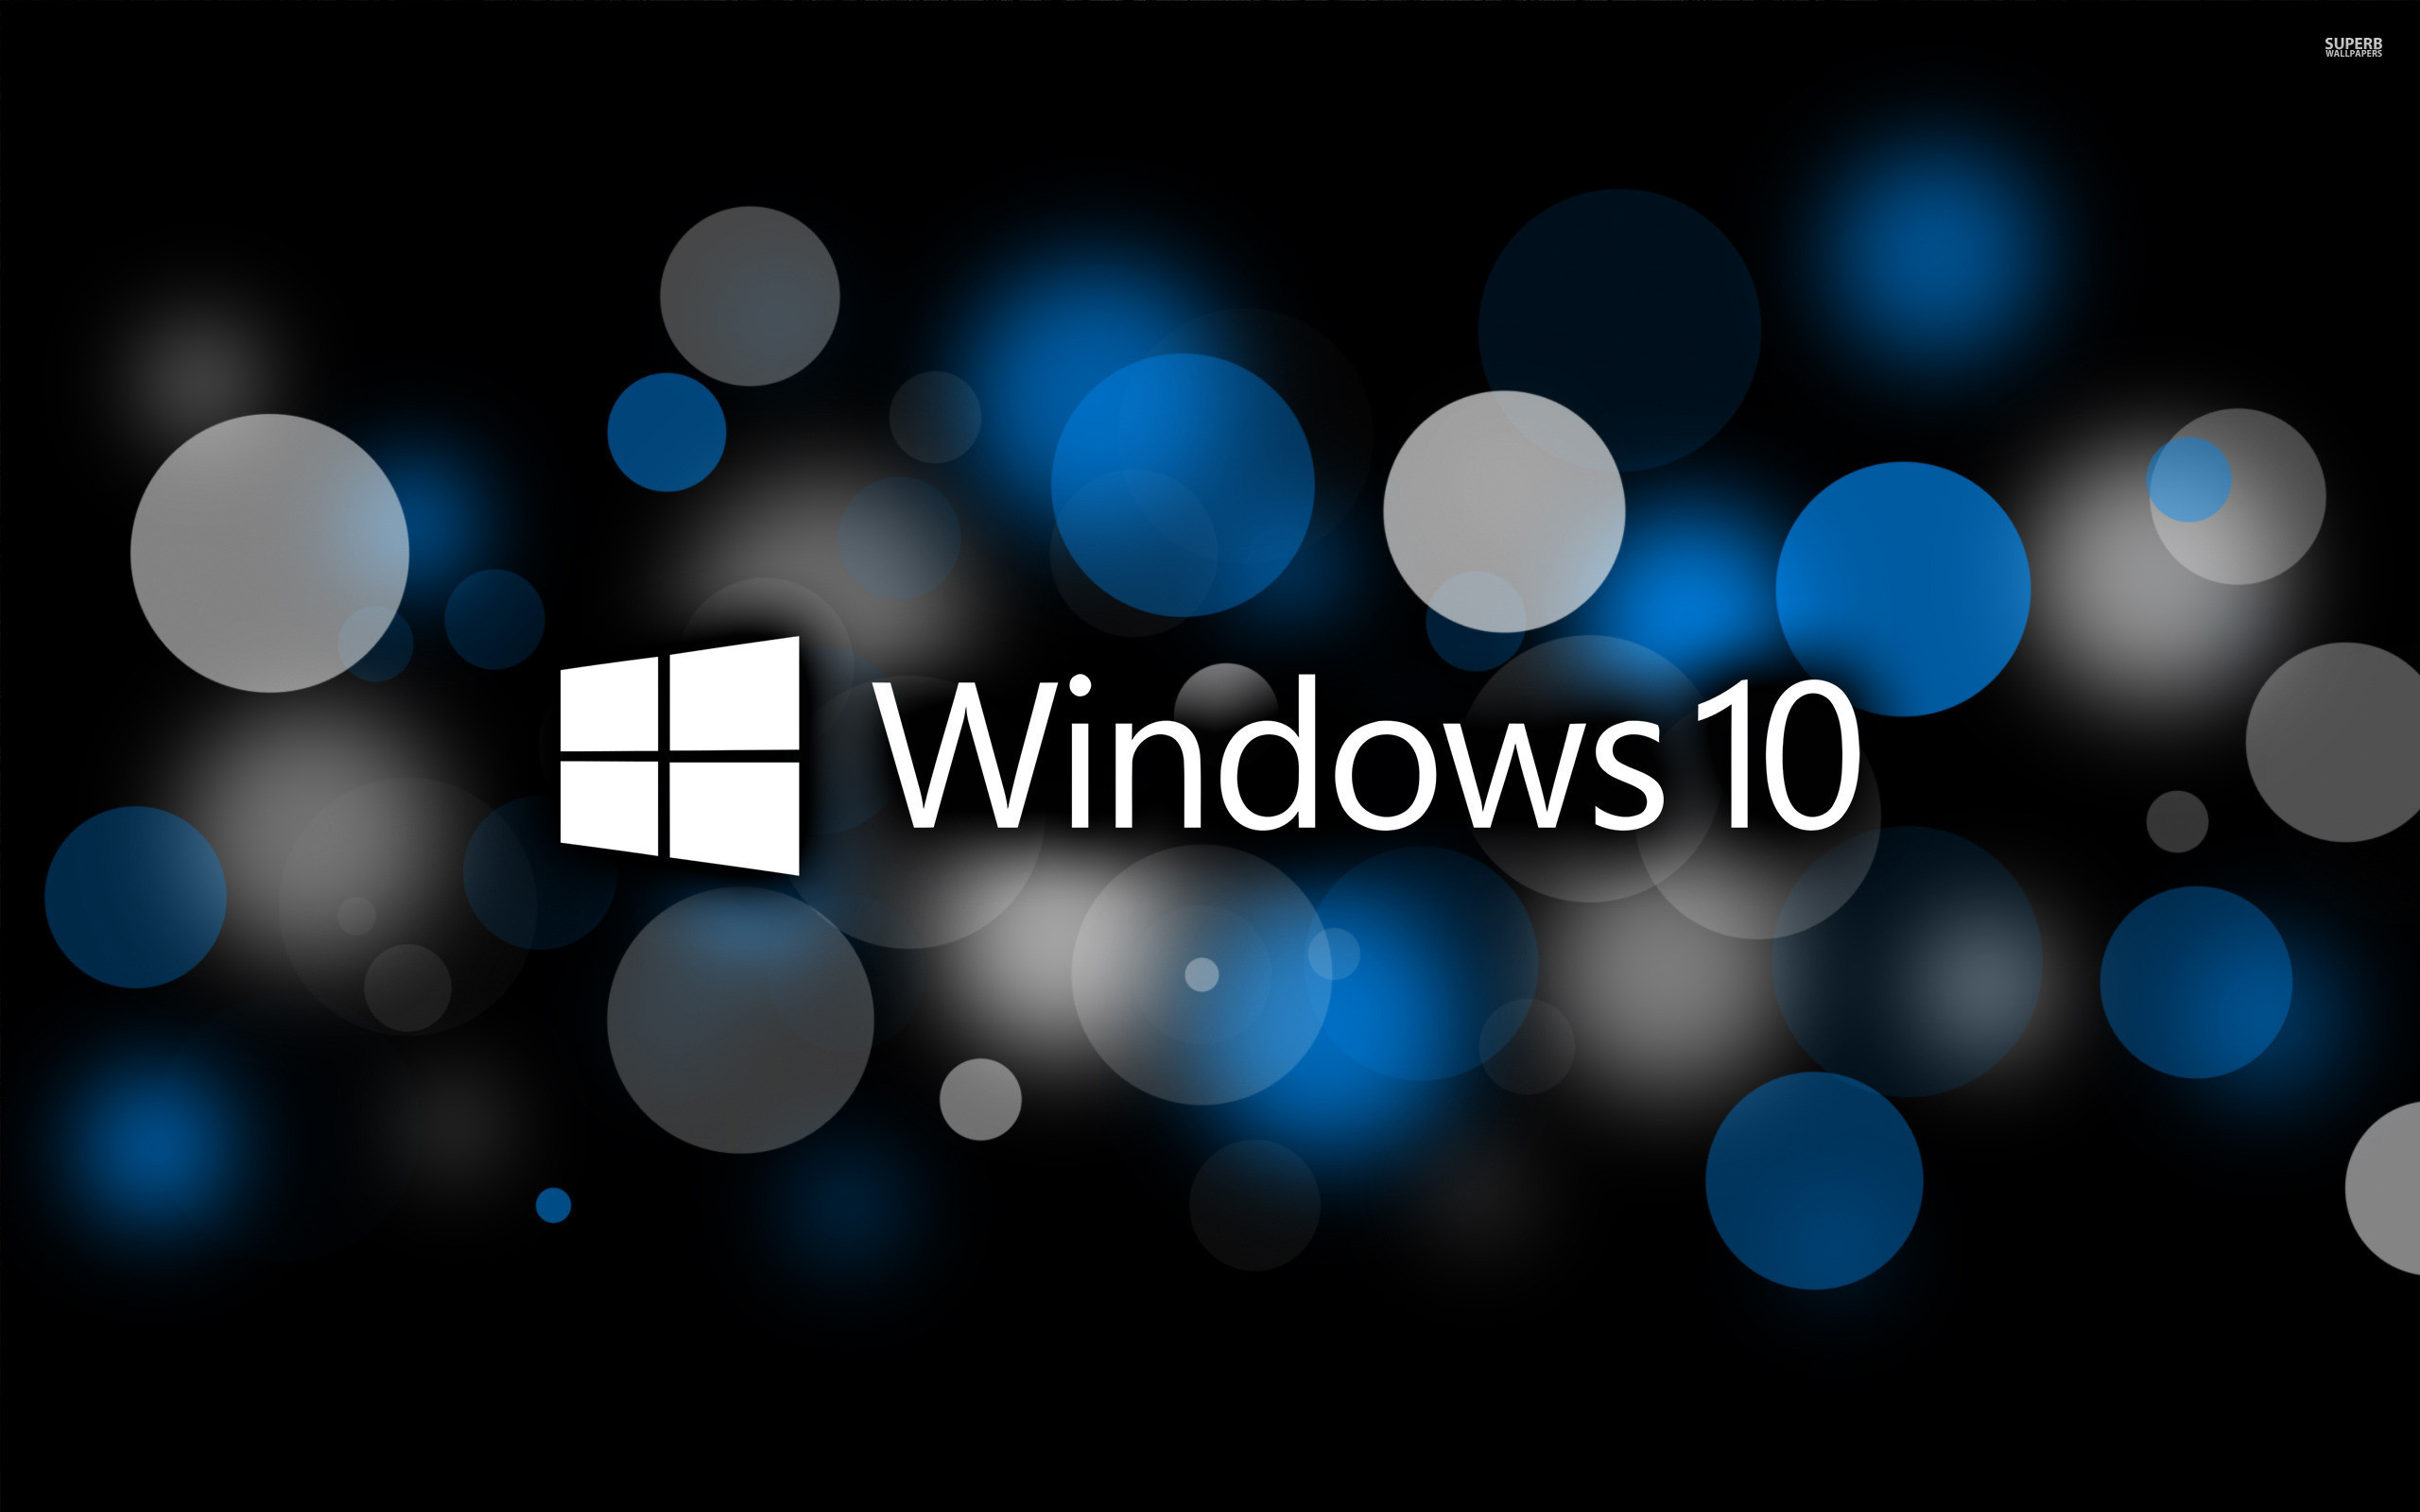 Motion Blue Windows 10 wallpaper Windows 10 wallpapers Pinterest Windows 10, Wallpaper and Wallpaper windows 10